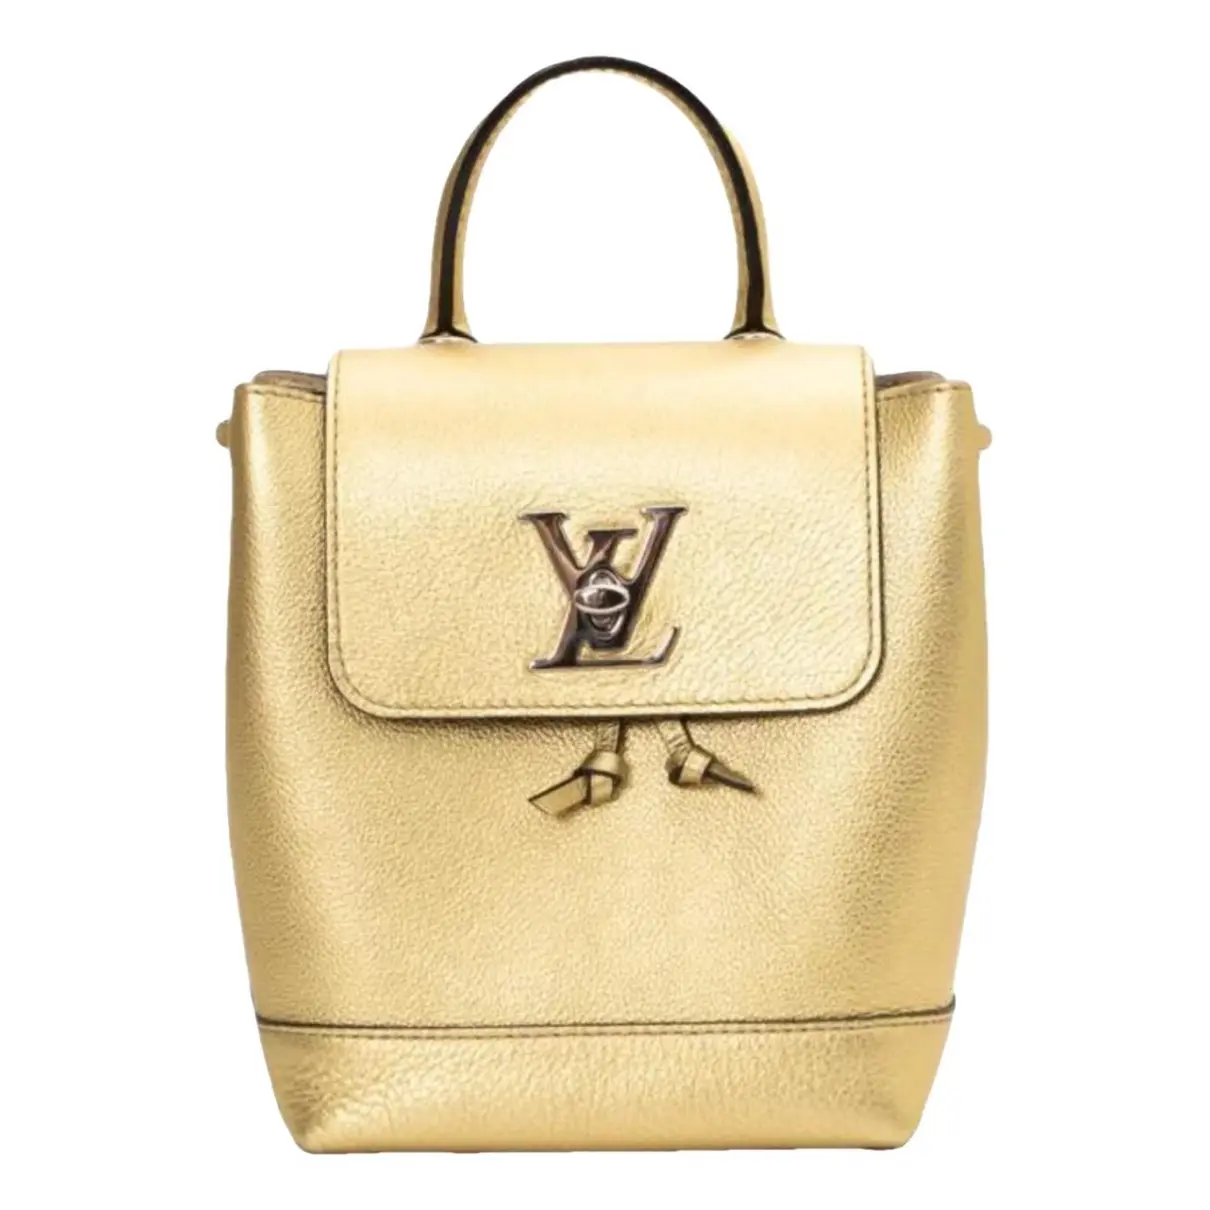 Lockme leather bag Louis Vuitton